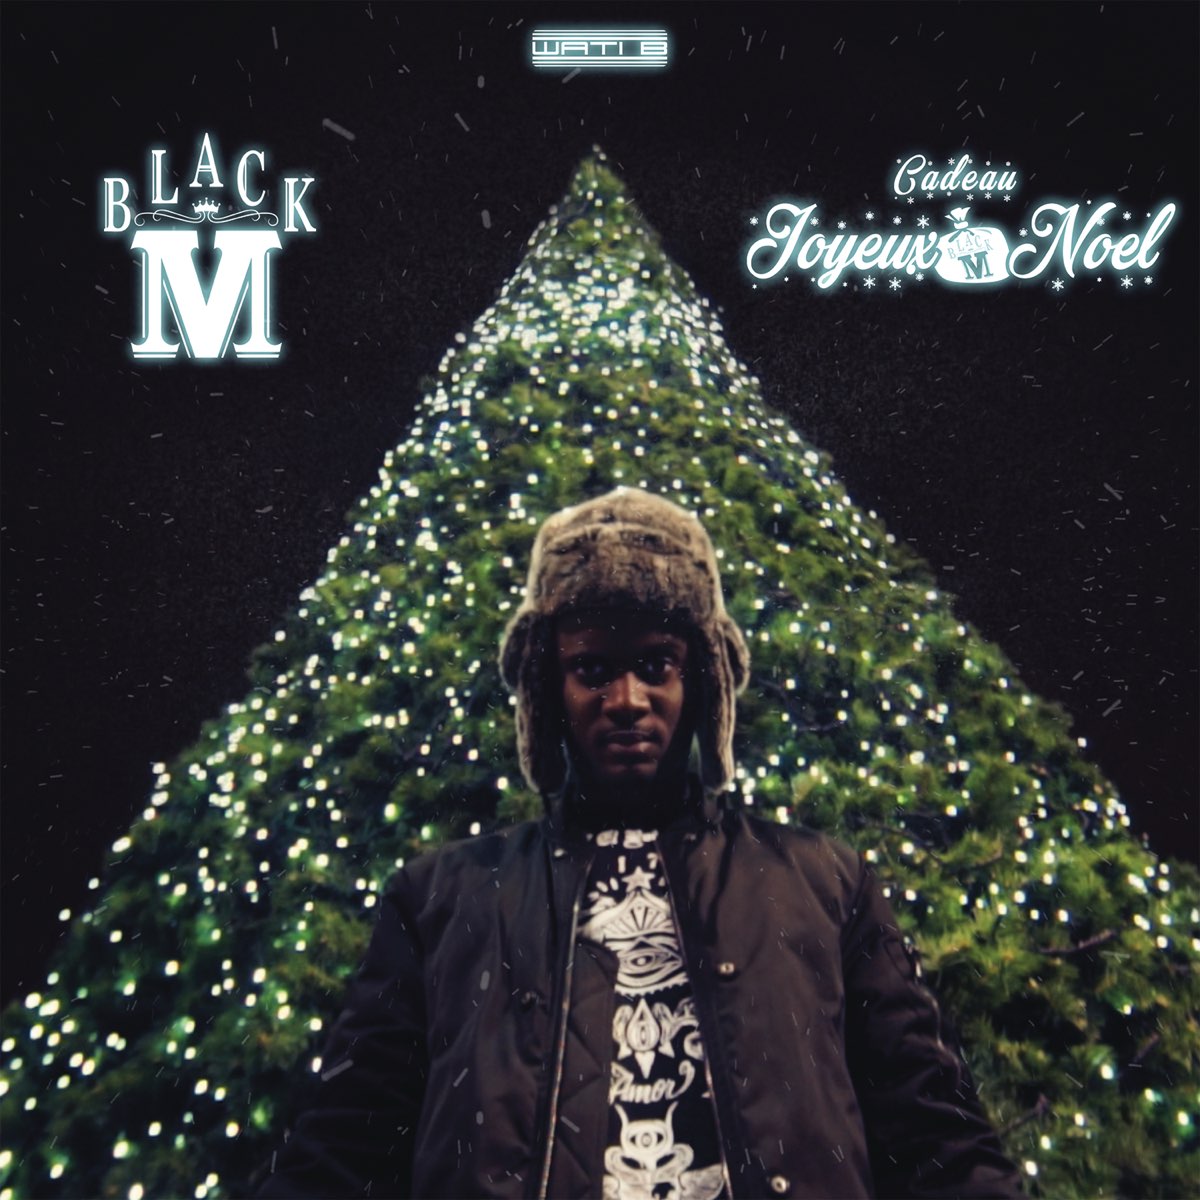 Cadeau Joyeux Noël - Single by Black M on Apple Music